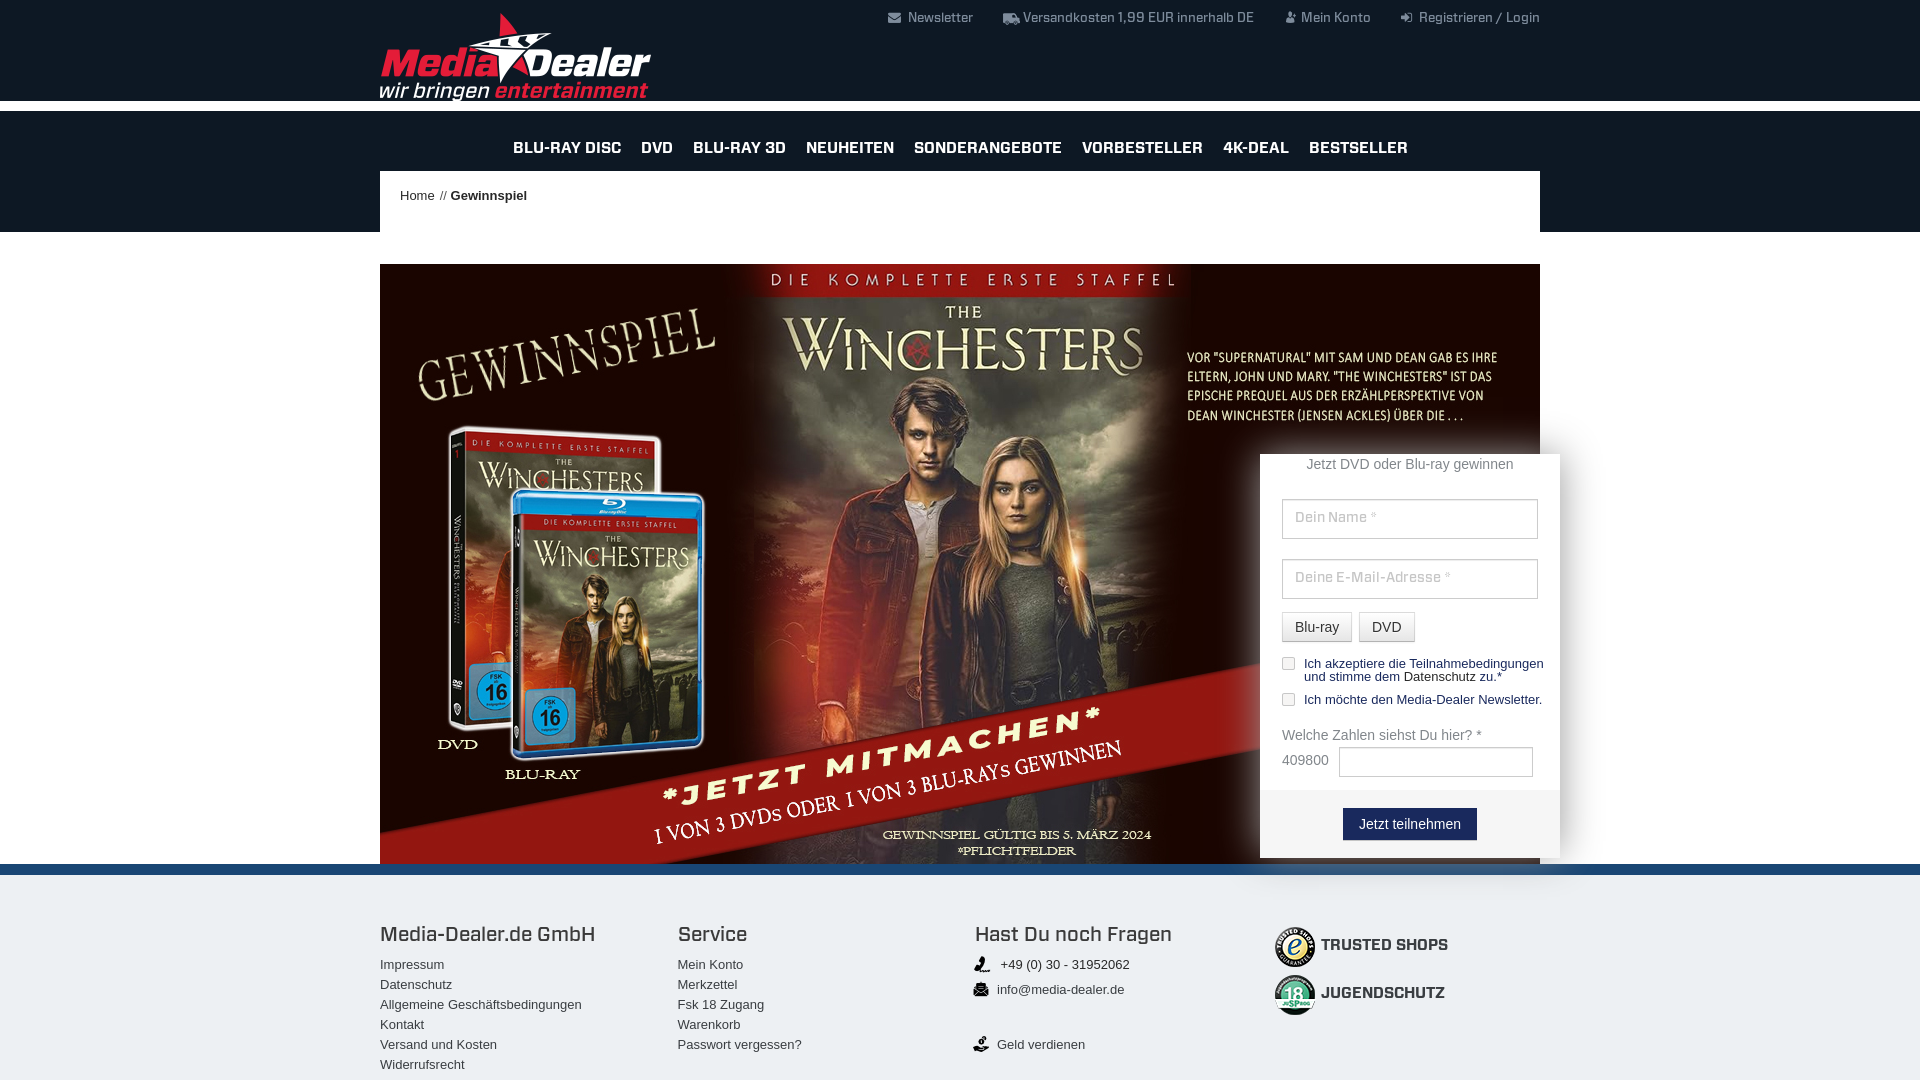 The Winchesters Staffel 01 Bluray oder DVD